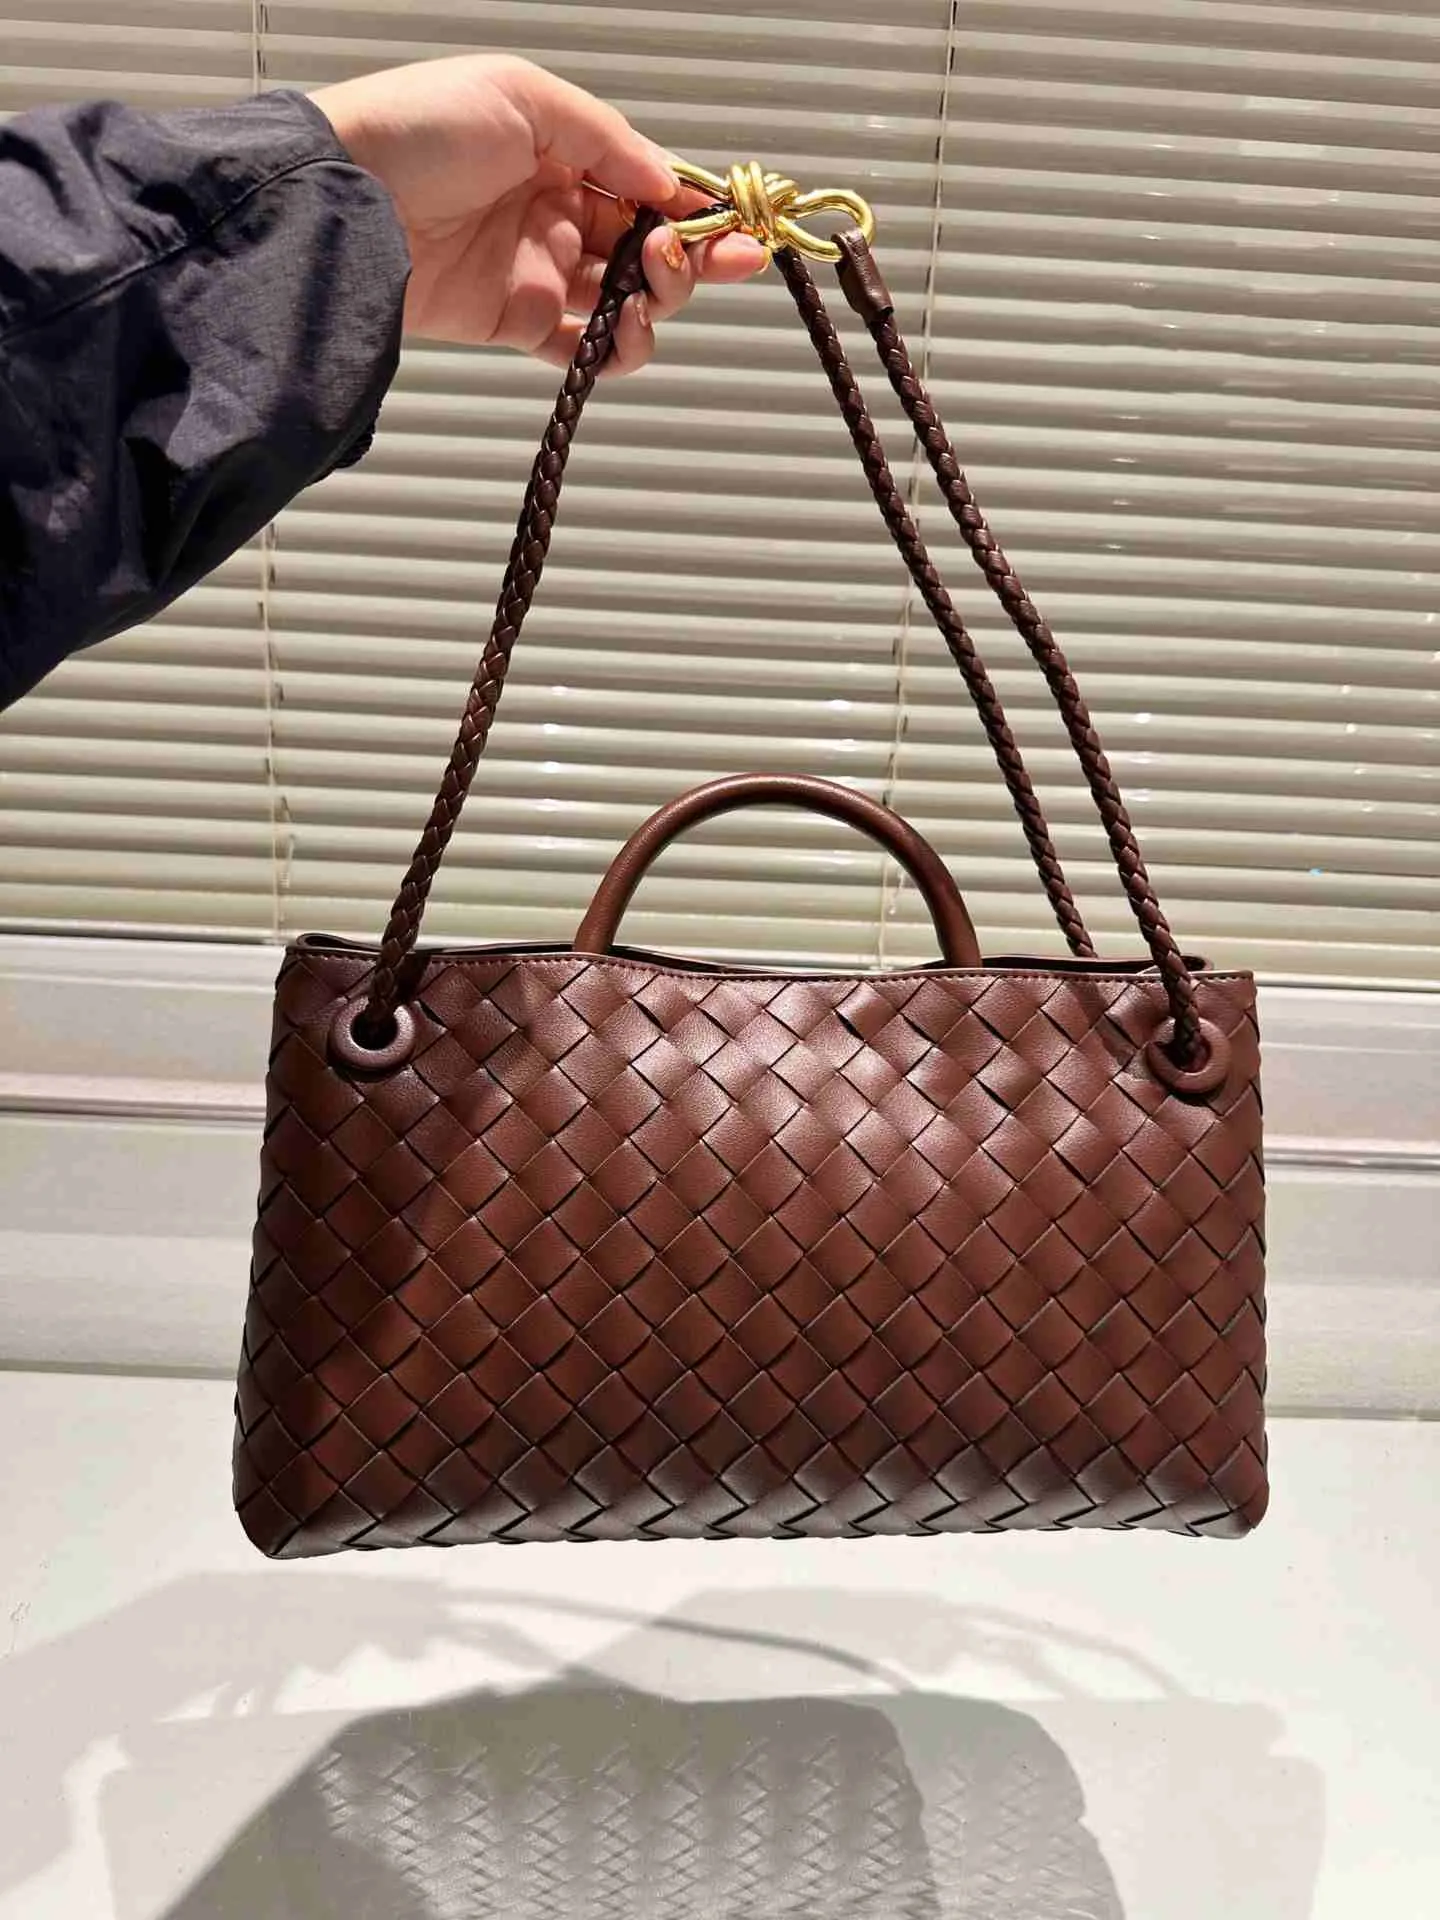 Novo designer de luxo saco tecido sacos de compras feminino bolsa designer bolsa ombro alta capacidade hobo sacos alta qualidade couro